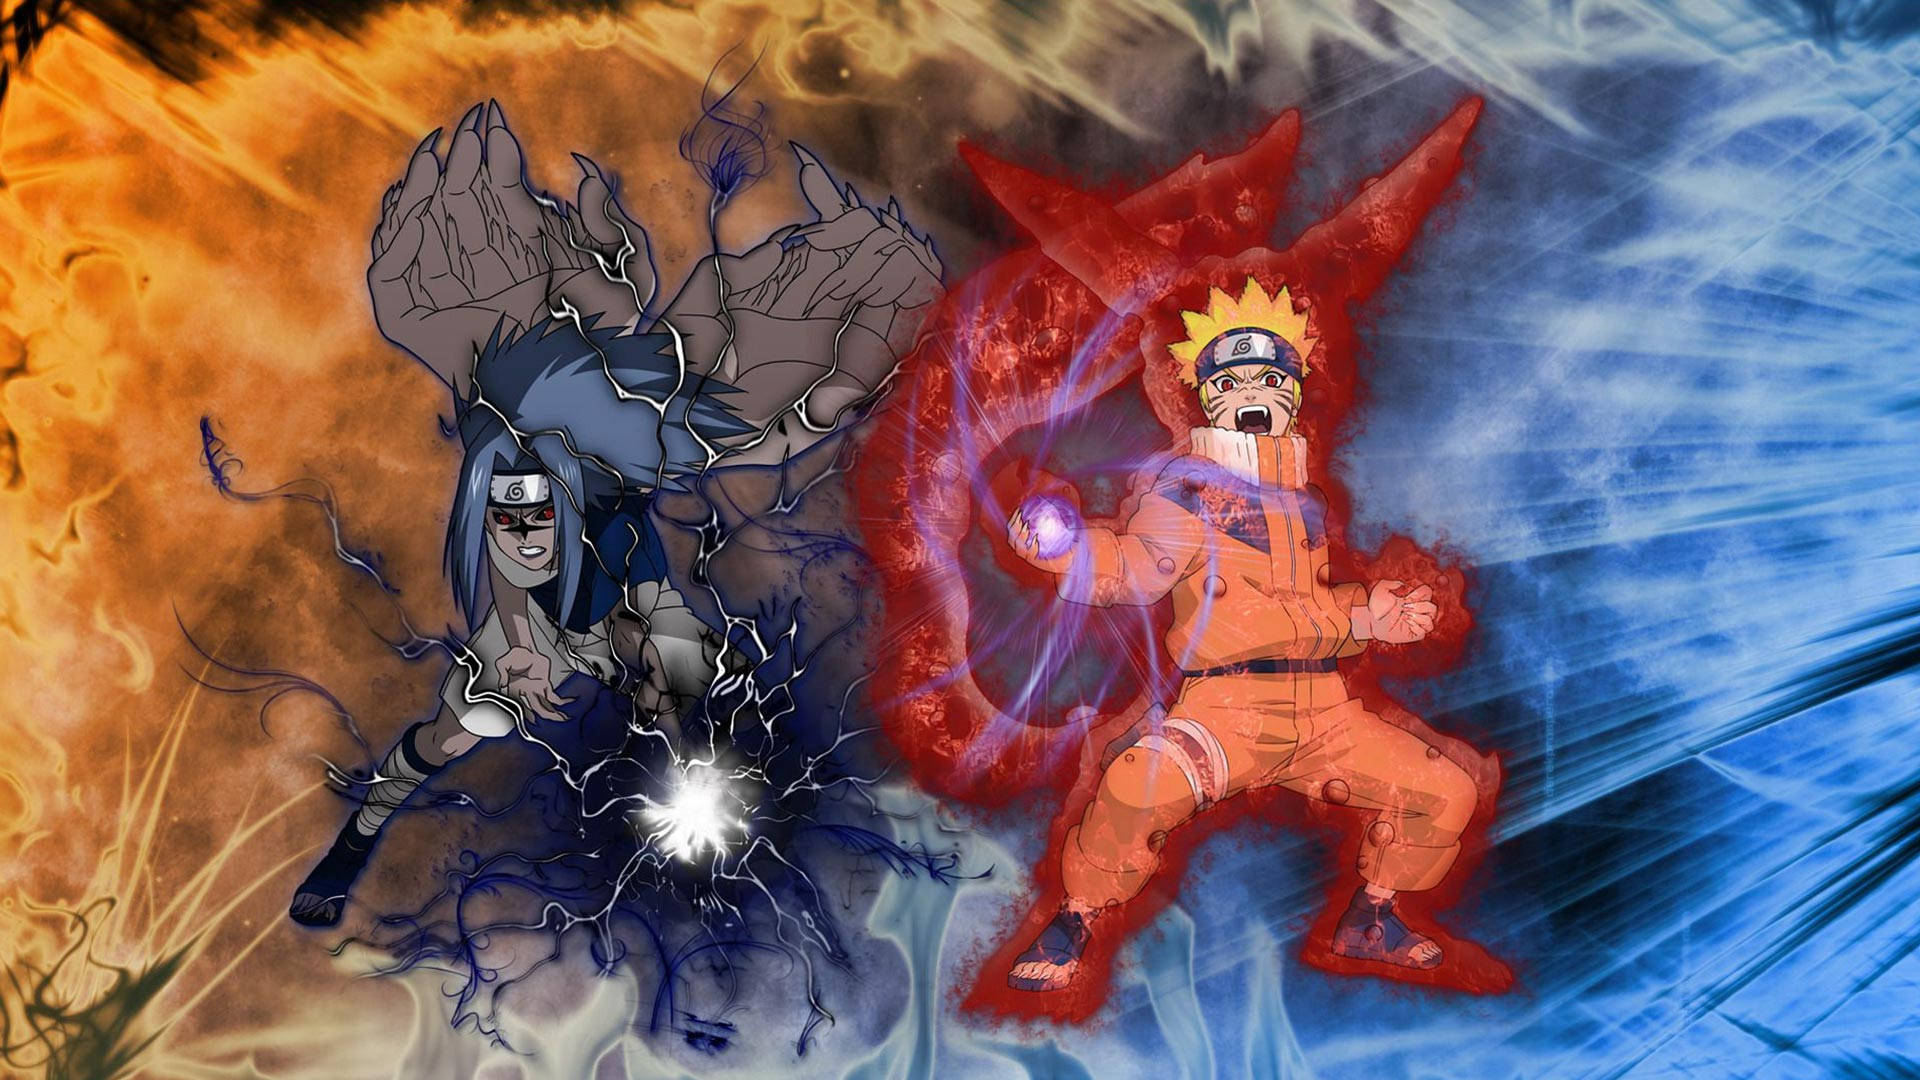 Young Naruto And Sasuke Transformation Wallpaper